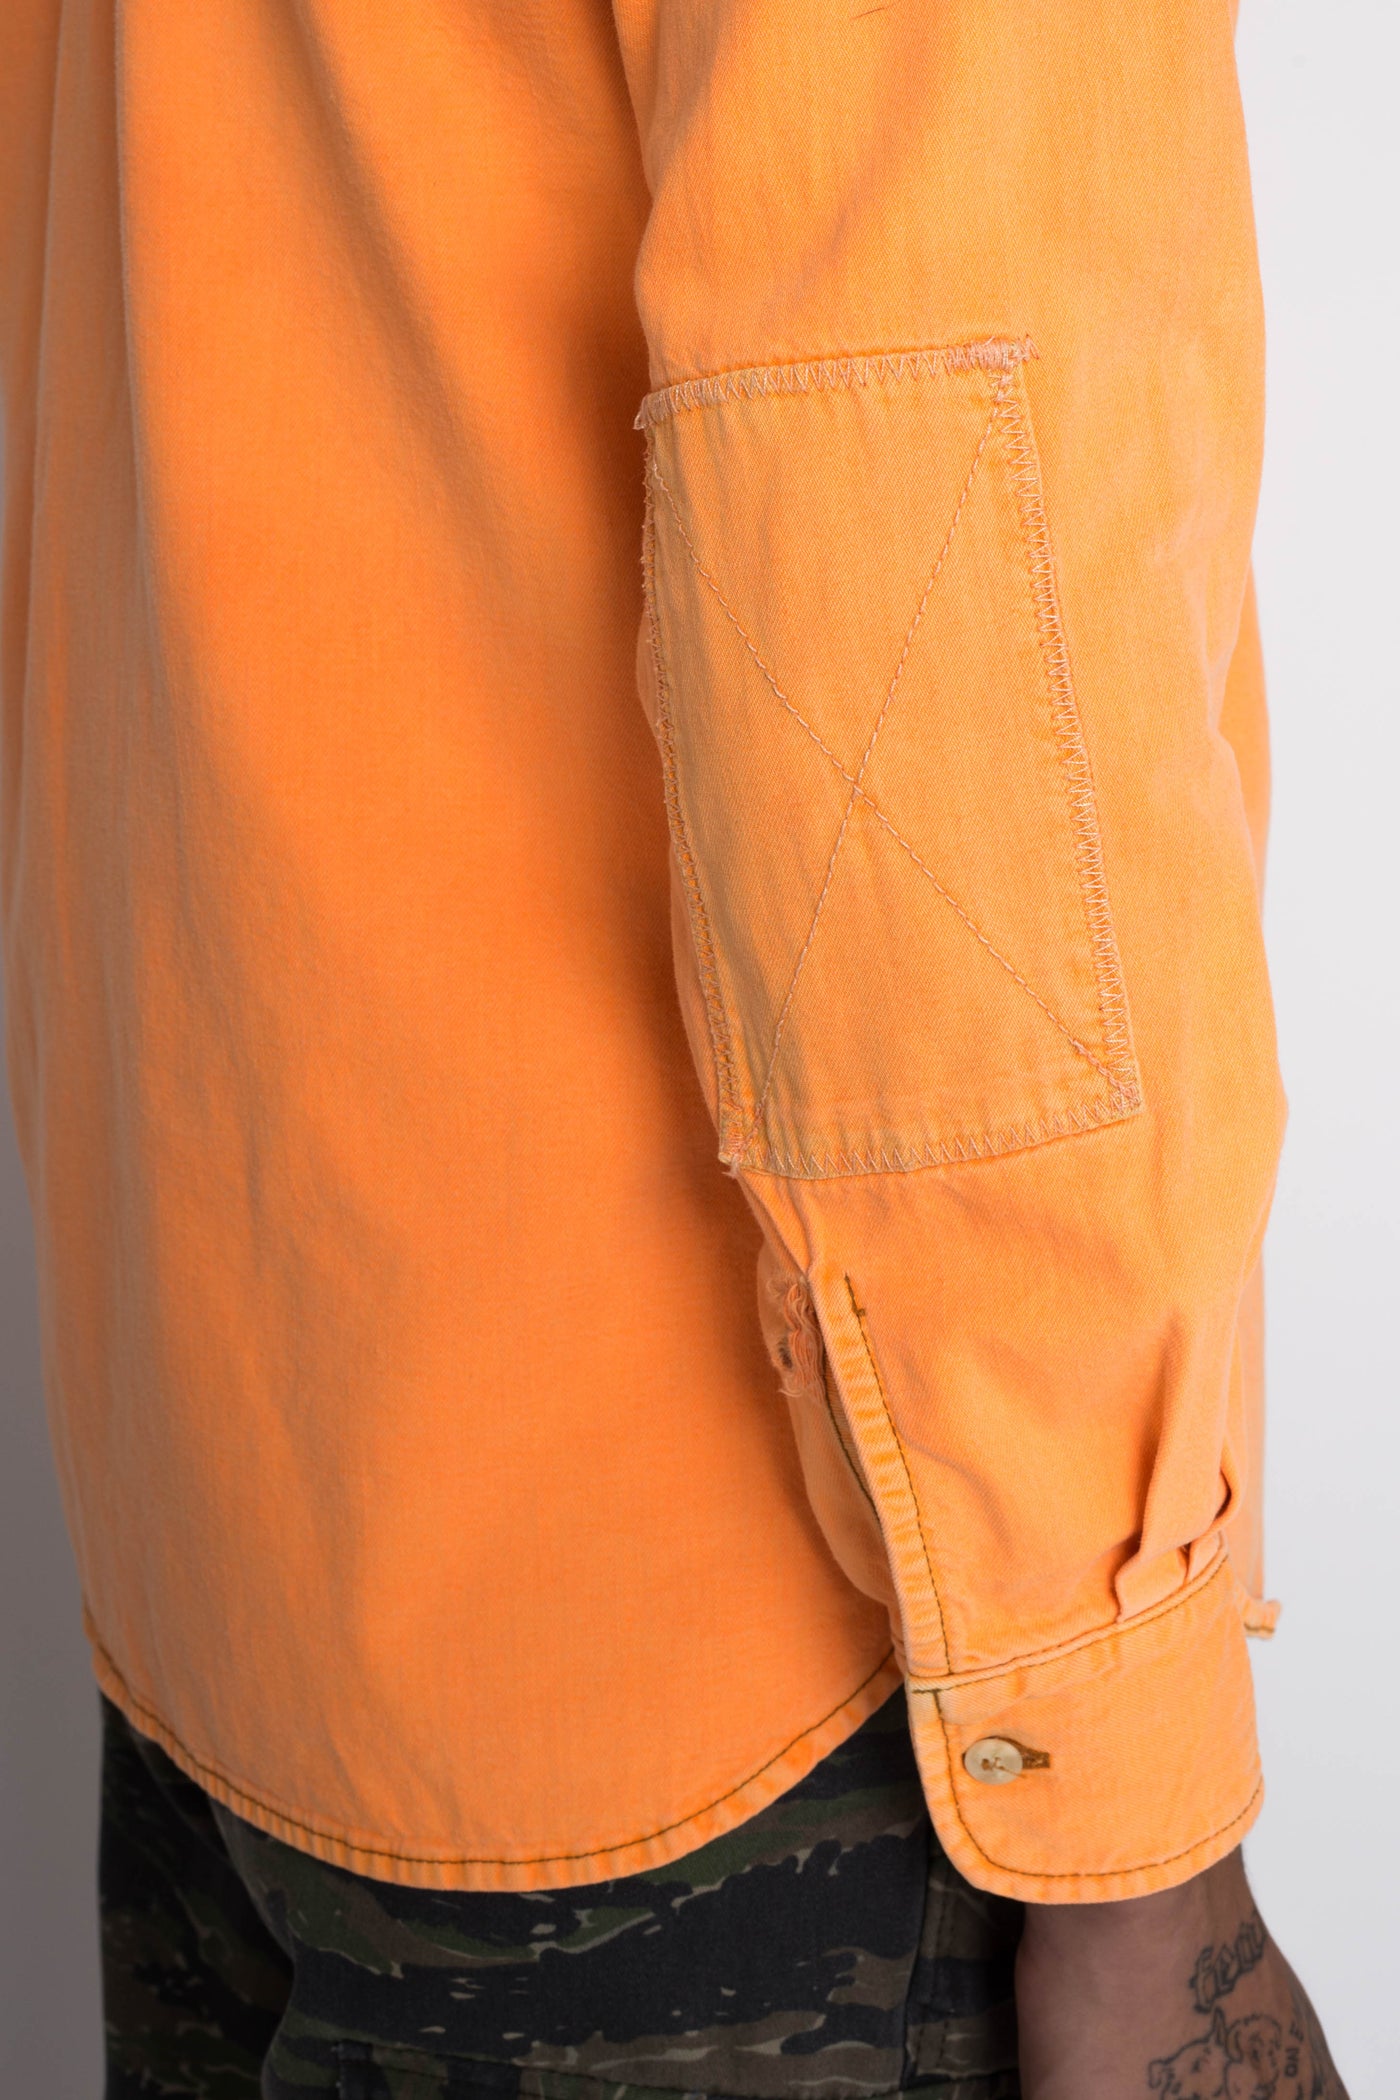 Work Shirt - Orange